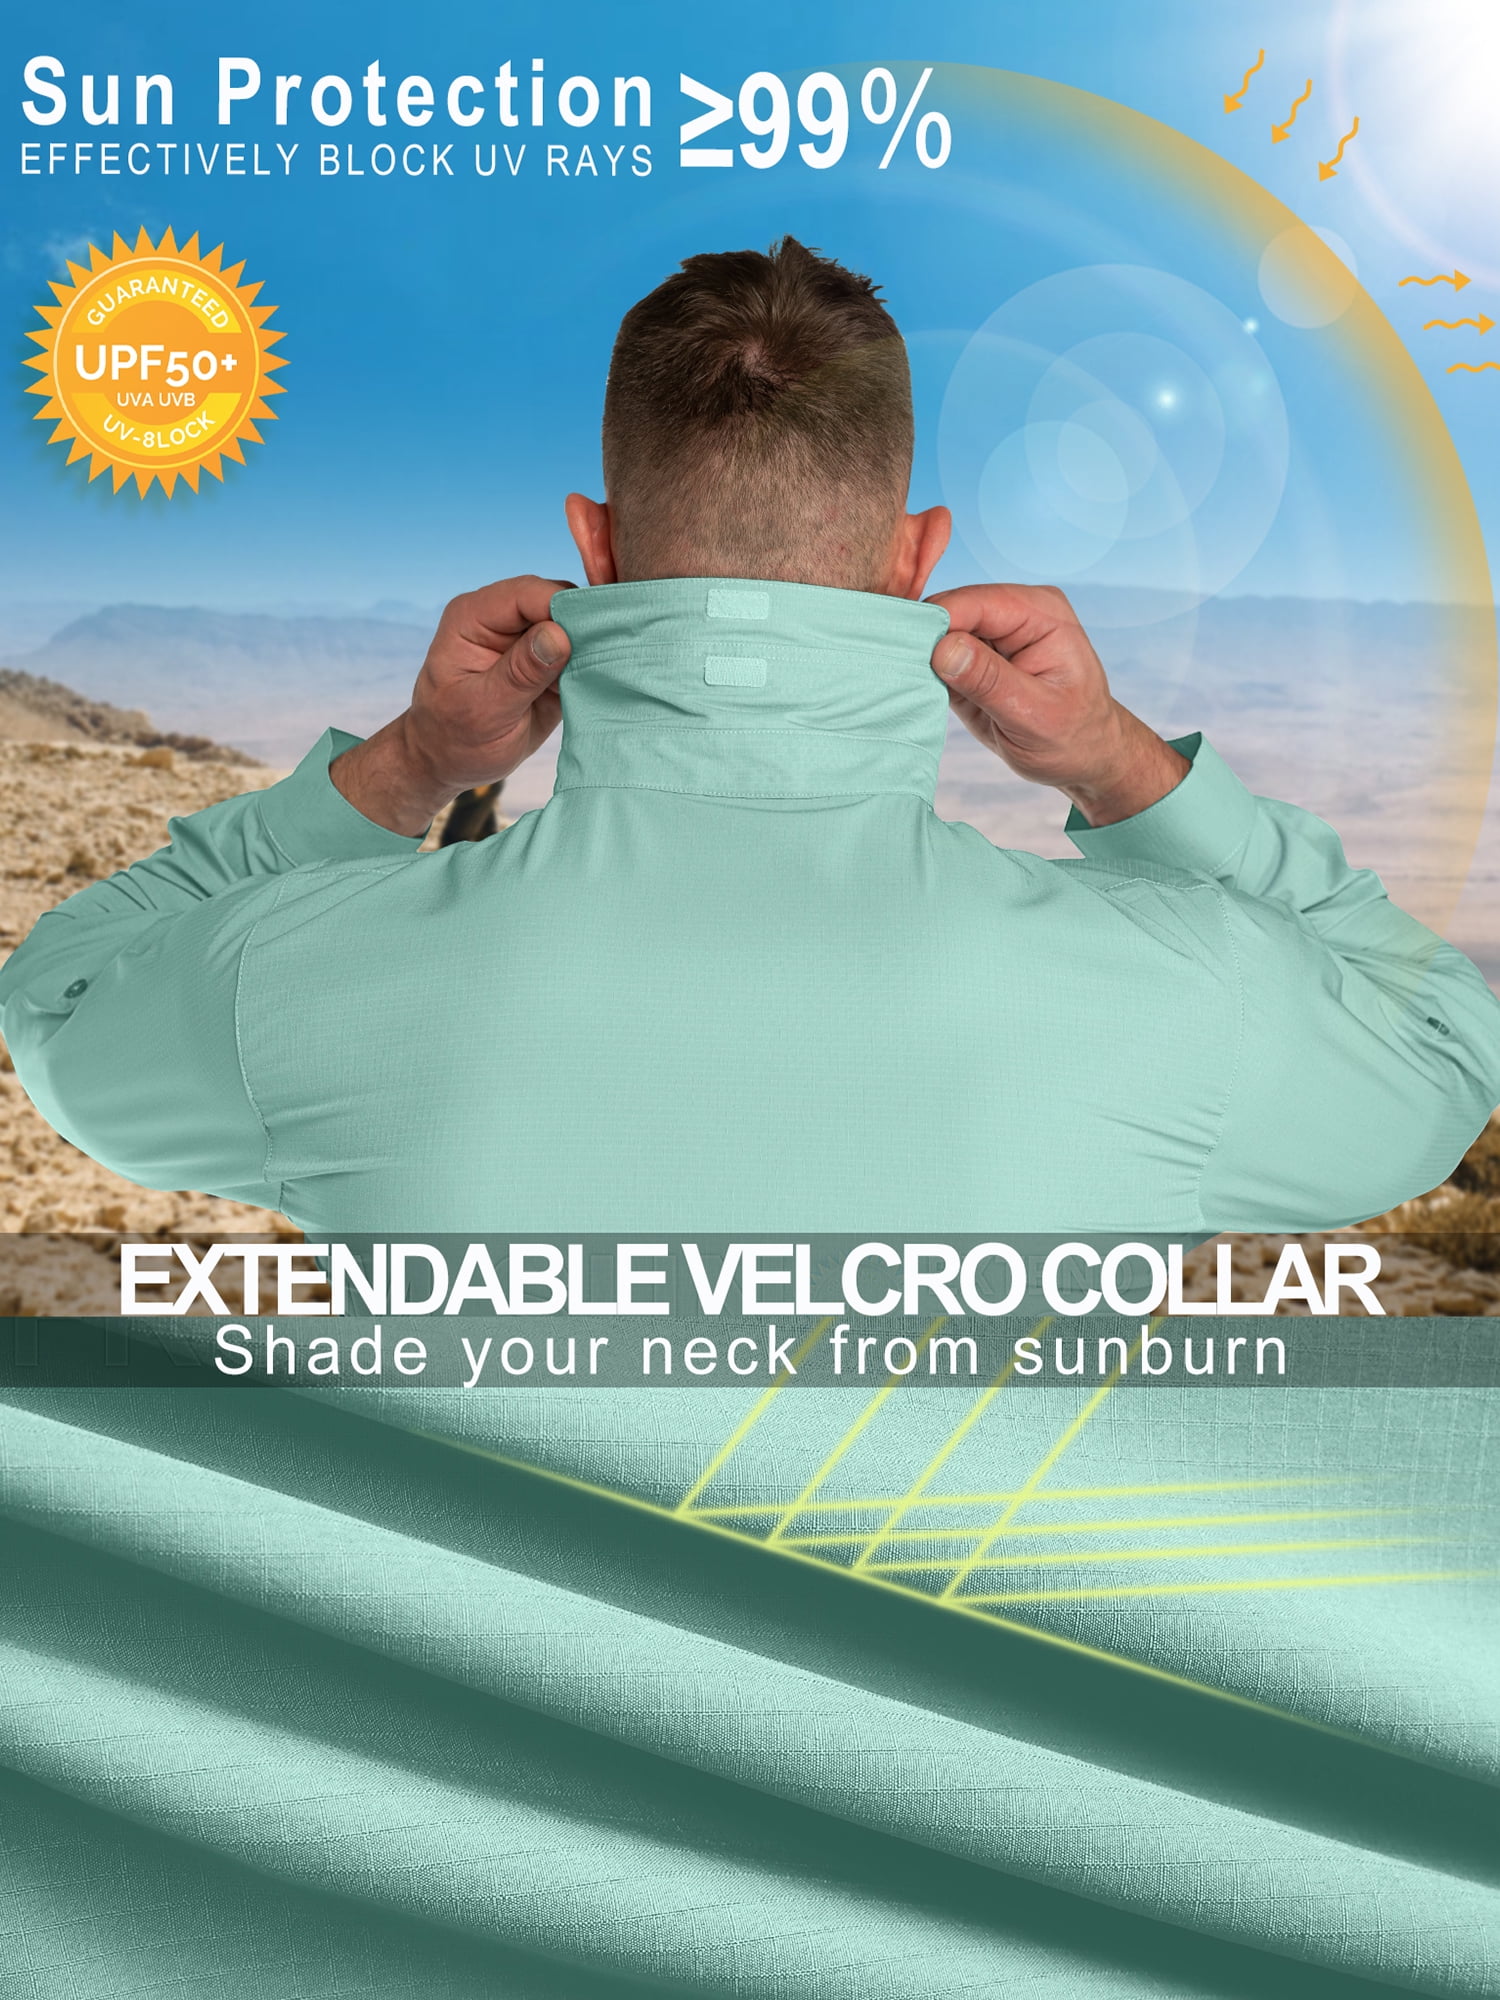  Fishing Shirts For Men, Long Sleeve Hiking Safari Sun Vented  Shirt SPF50 Quick Dry Cooling Lightweight Travel Outdoor,5039,Blue,M